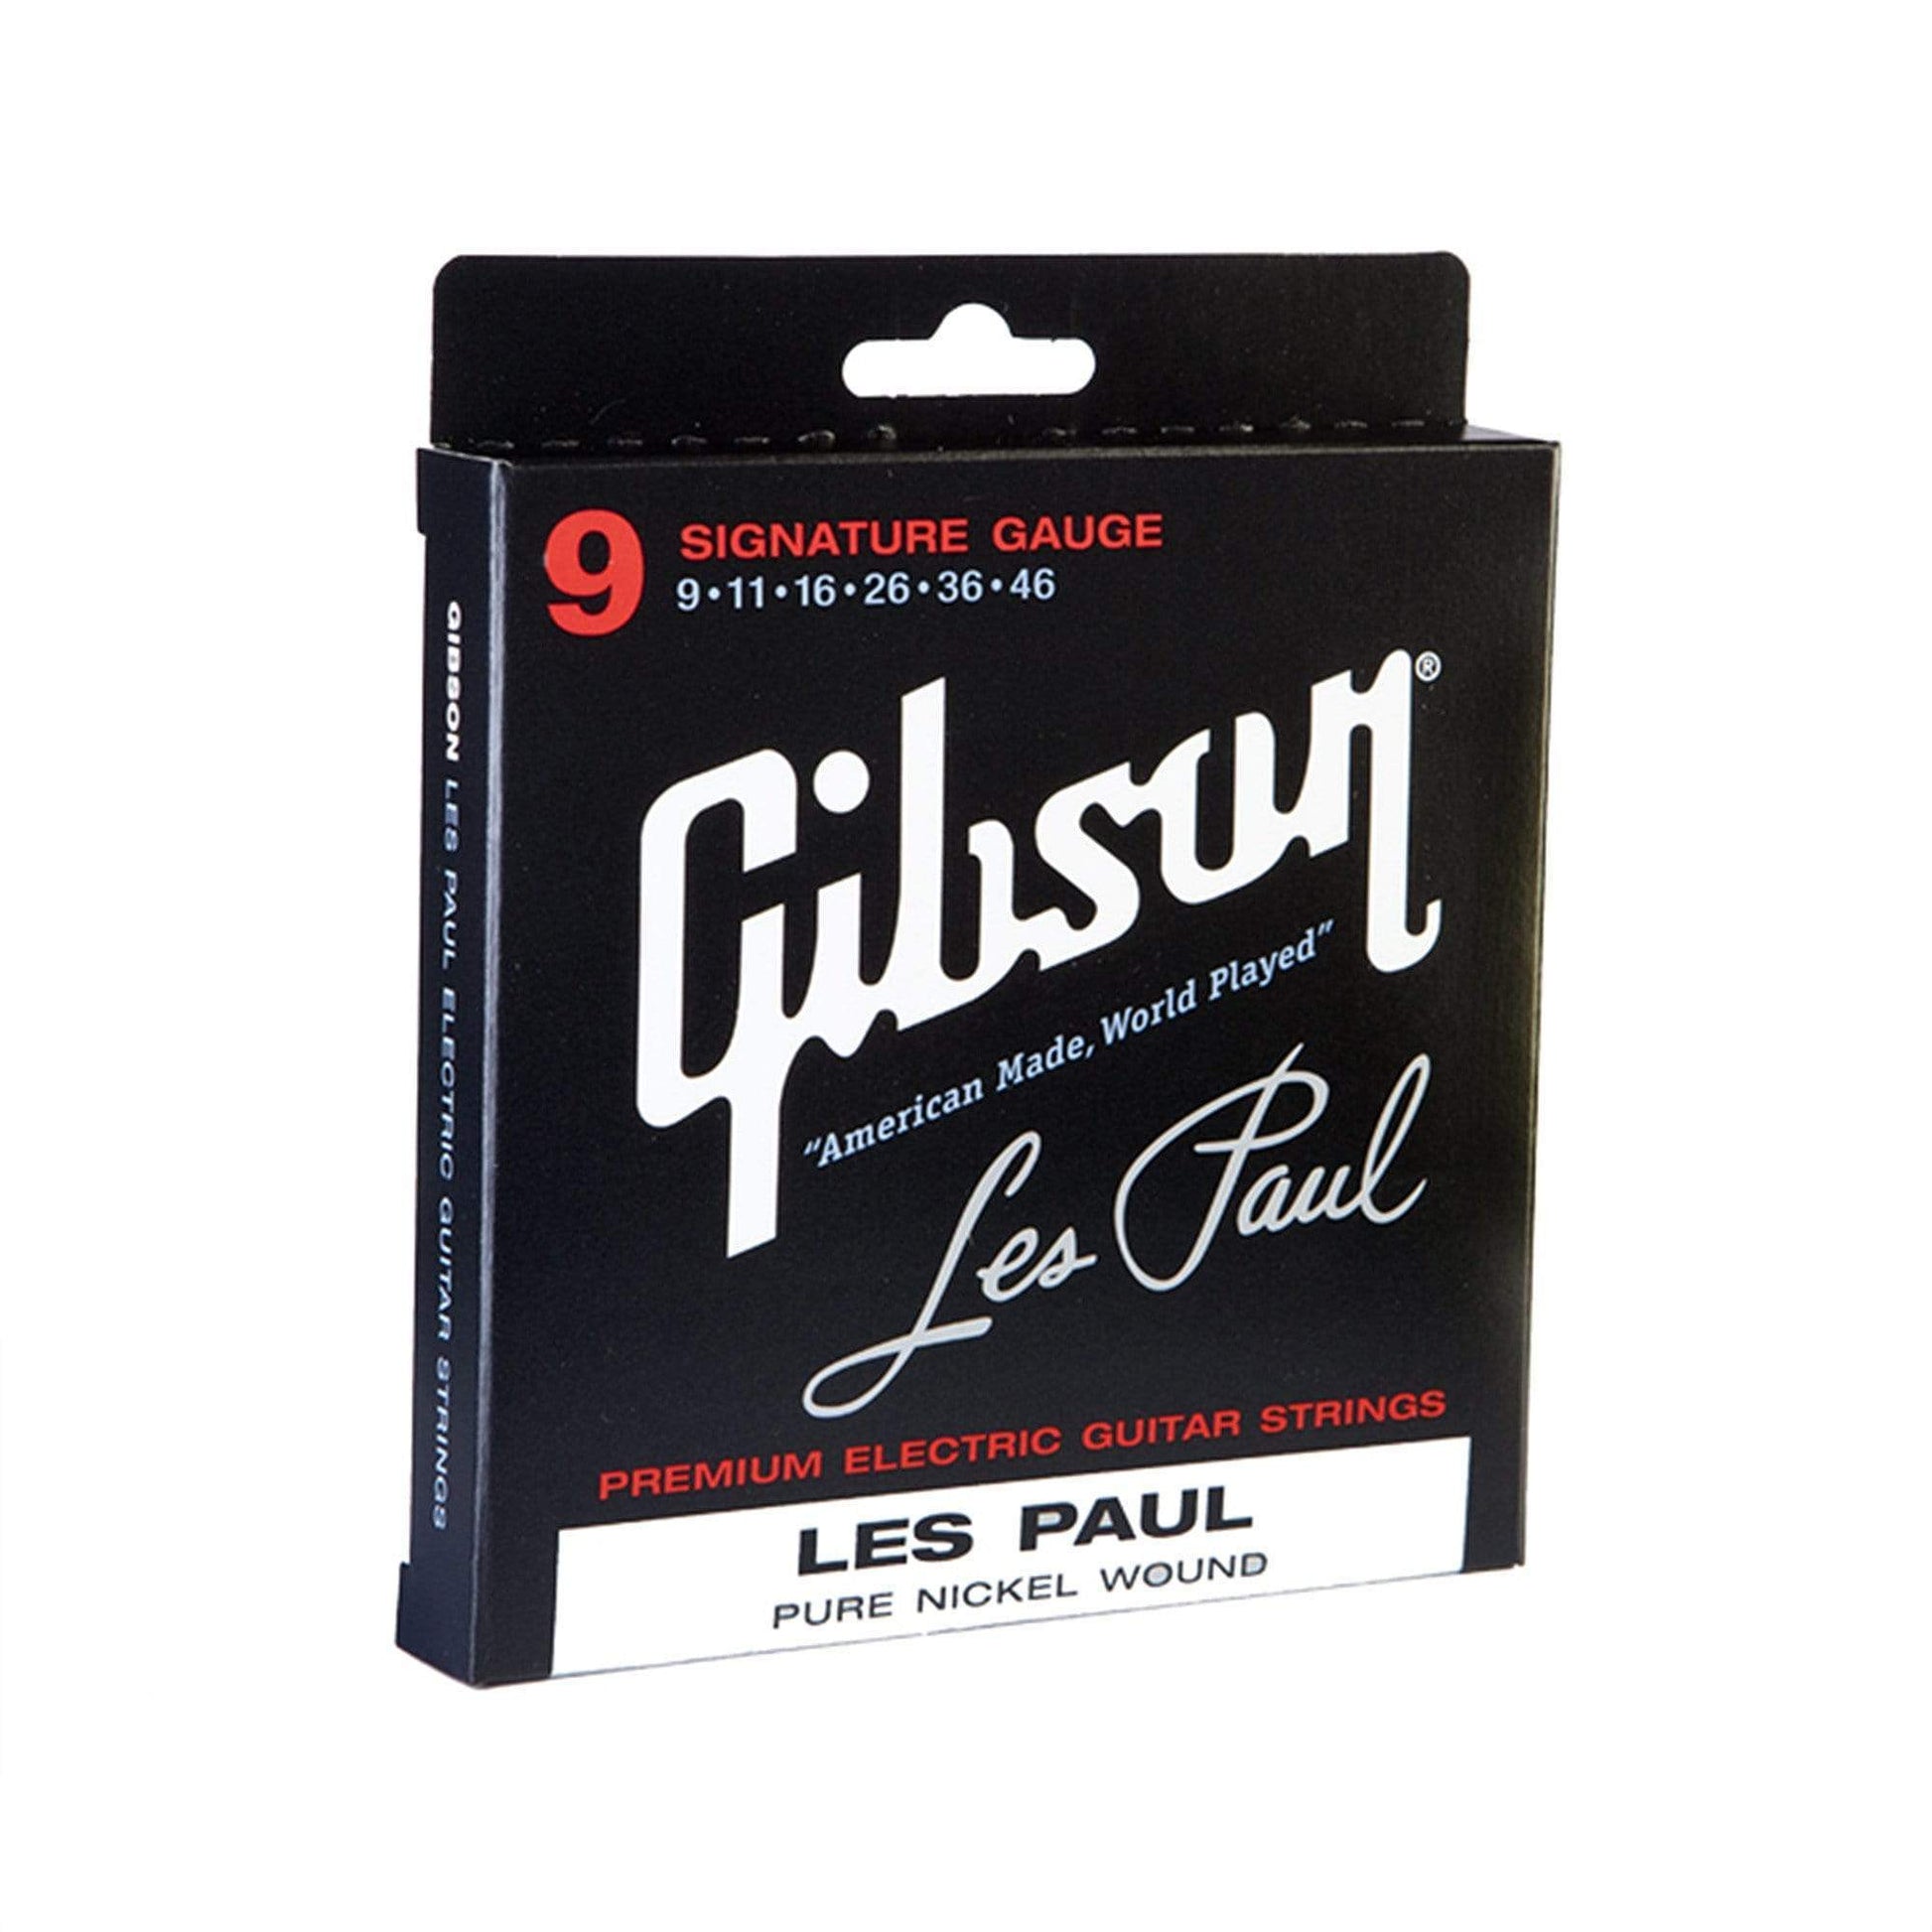 Gibson Gear Les Paul Signature Electric Guitar Strings 9-46 Accessories / Strings / Guitar Strings